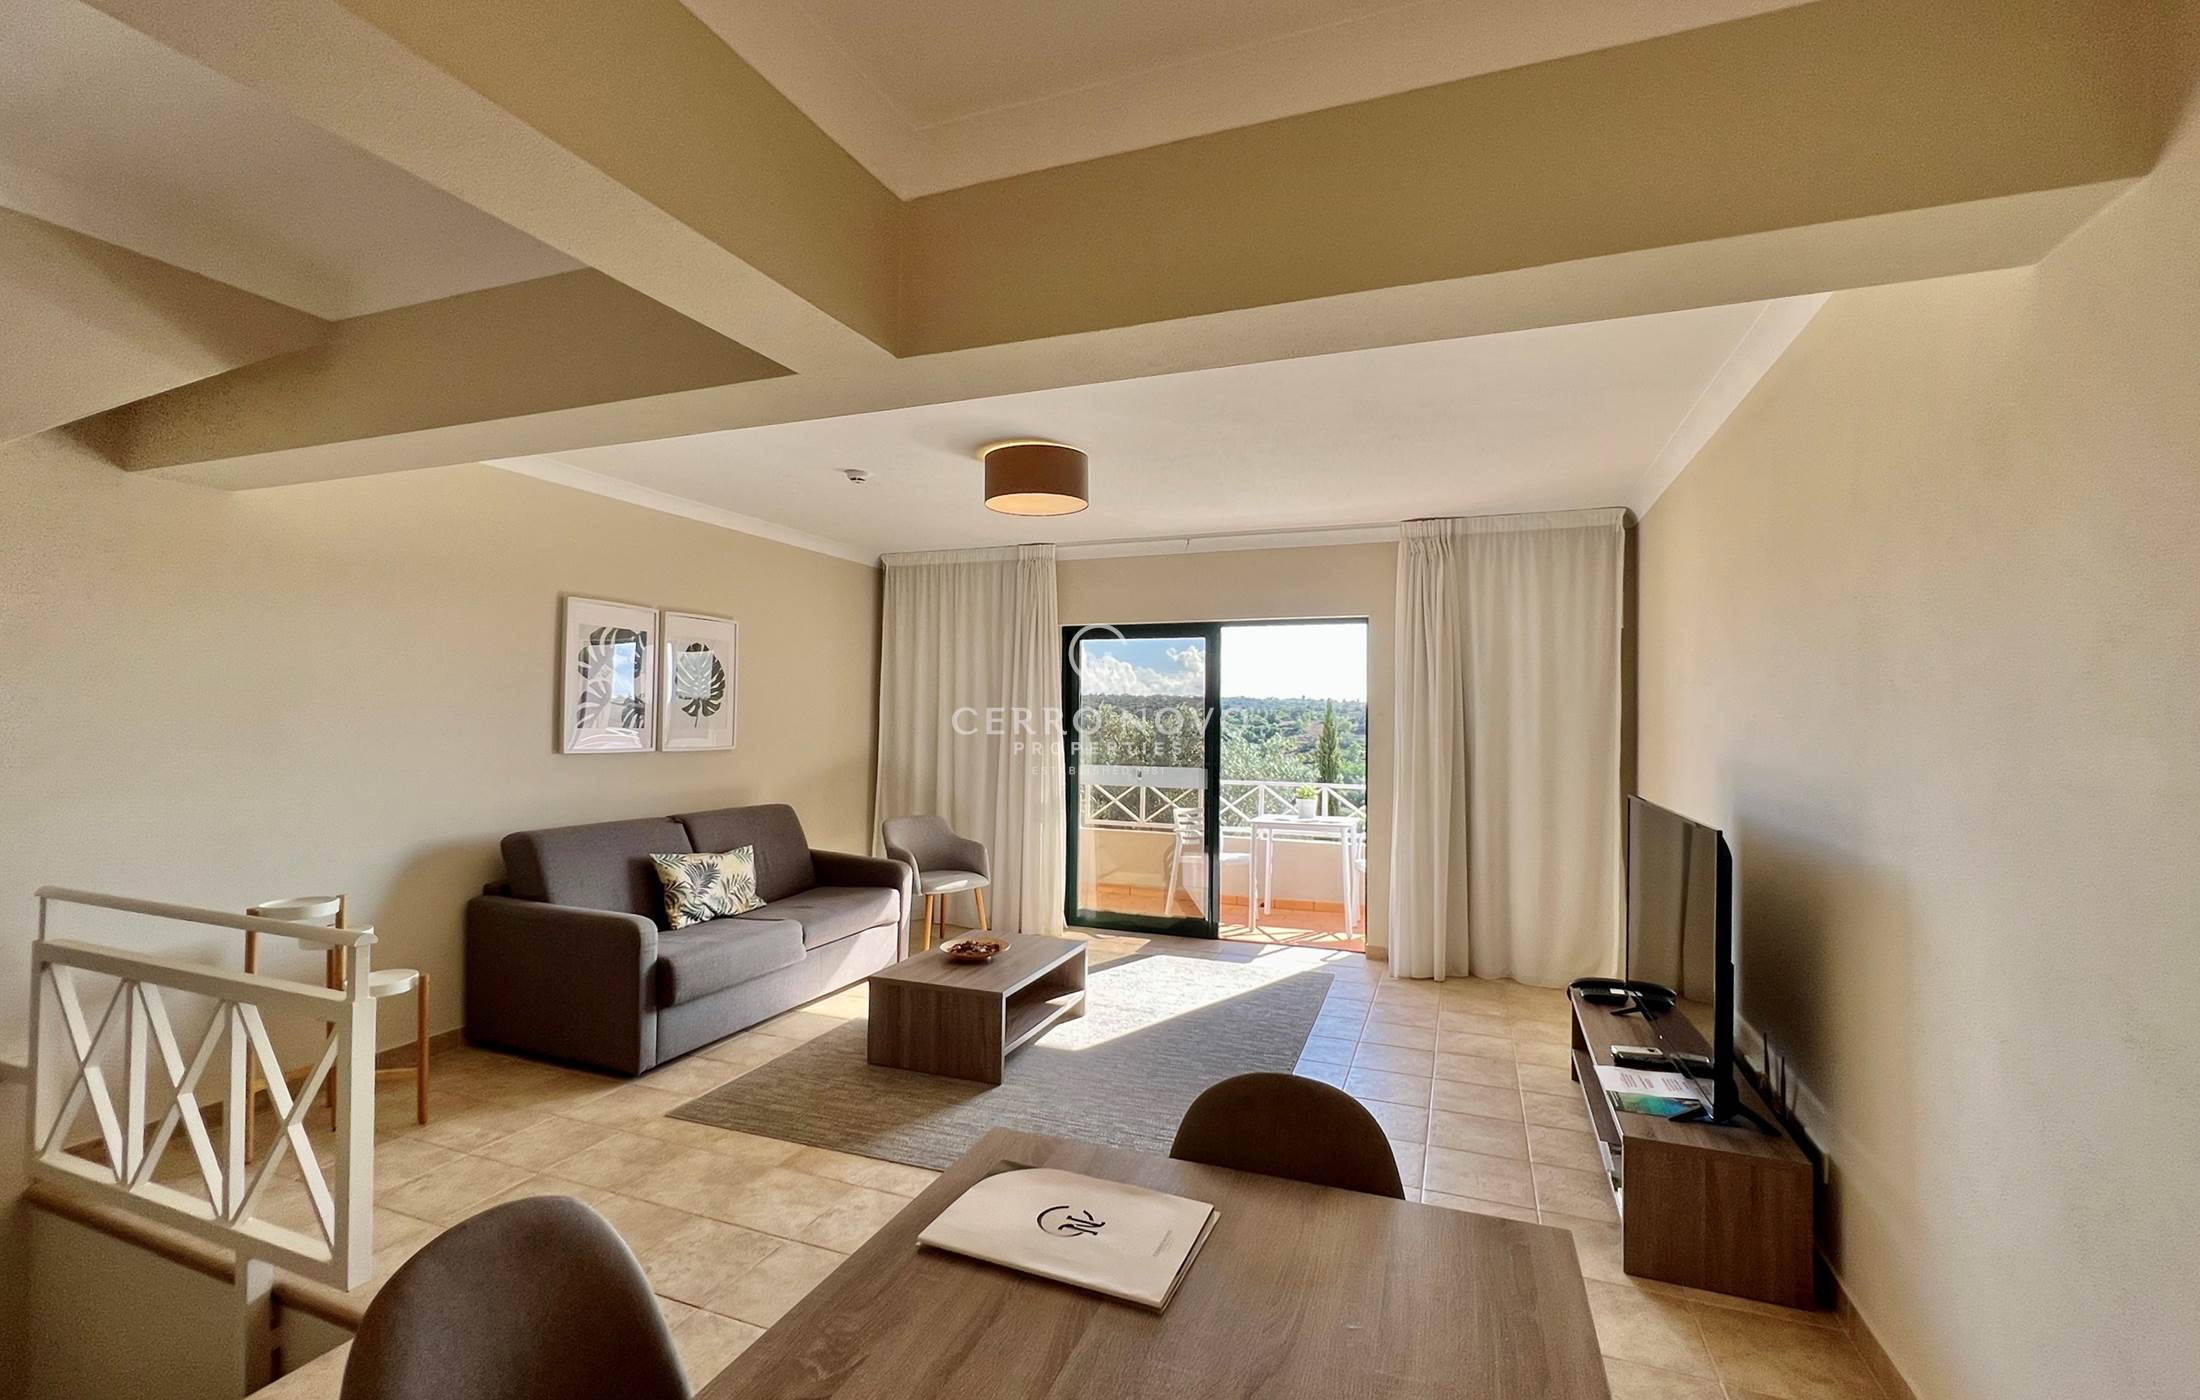 One-bedroom duplex apartment at Pestana Gramacho Golf